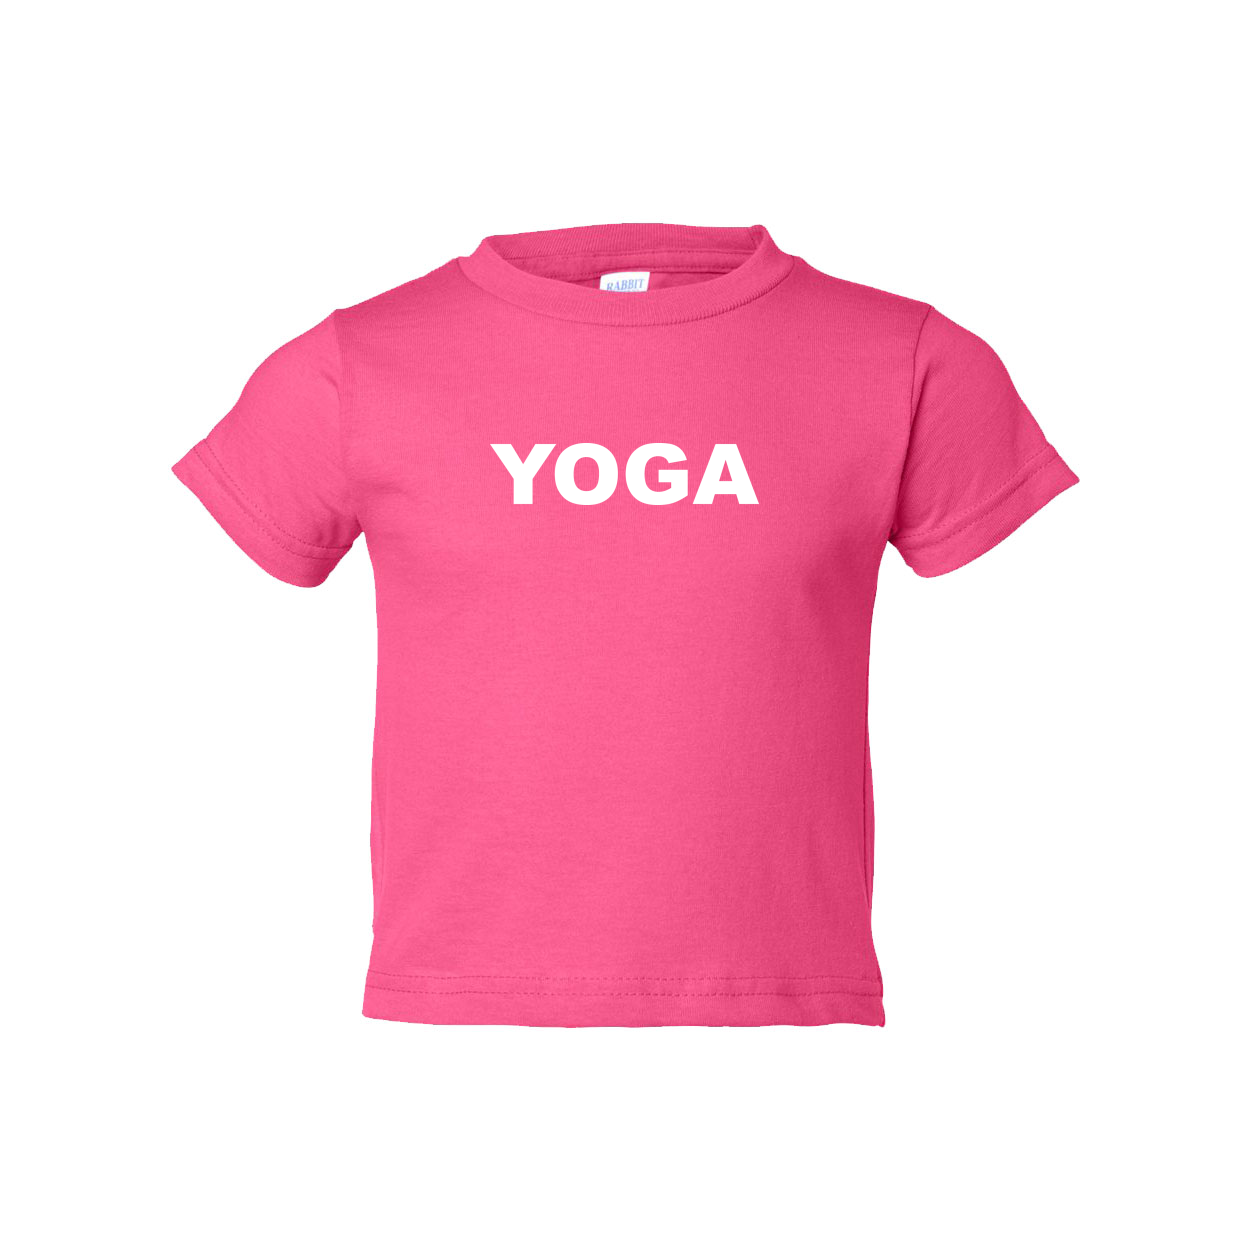 Yoga Brand Logo Classic Toddler T-Shirt Pink